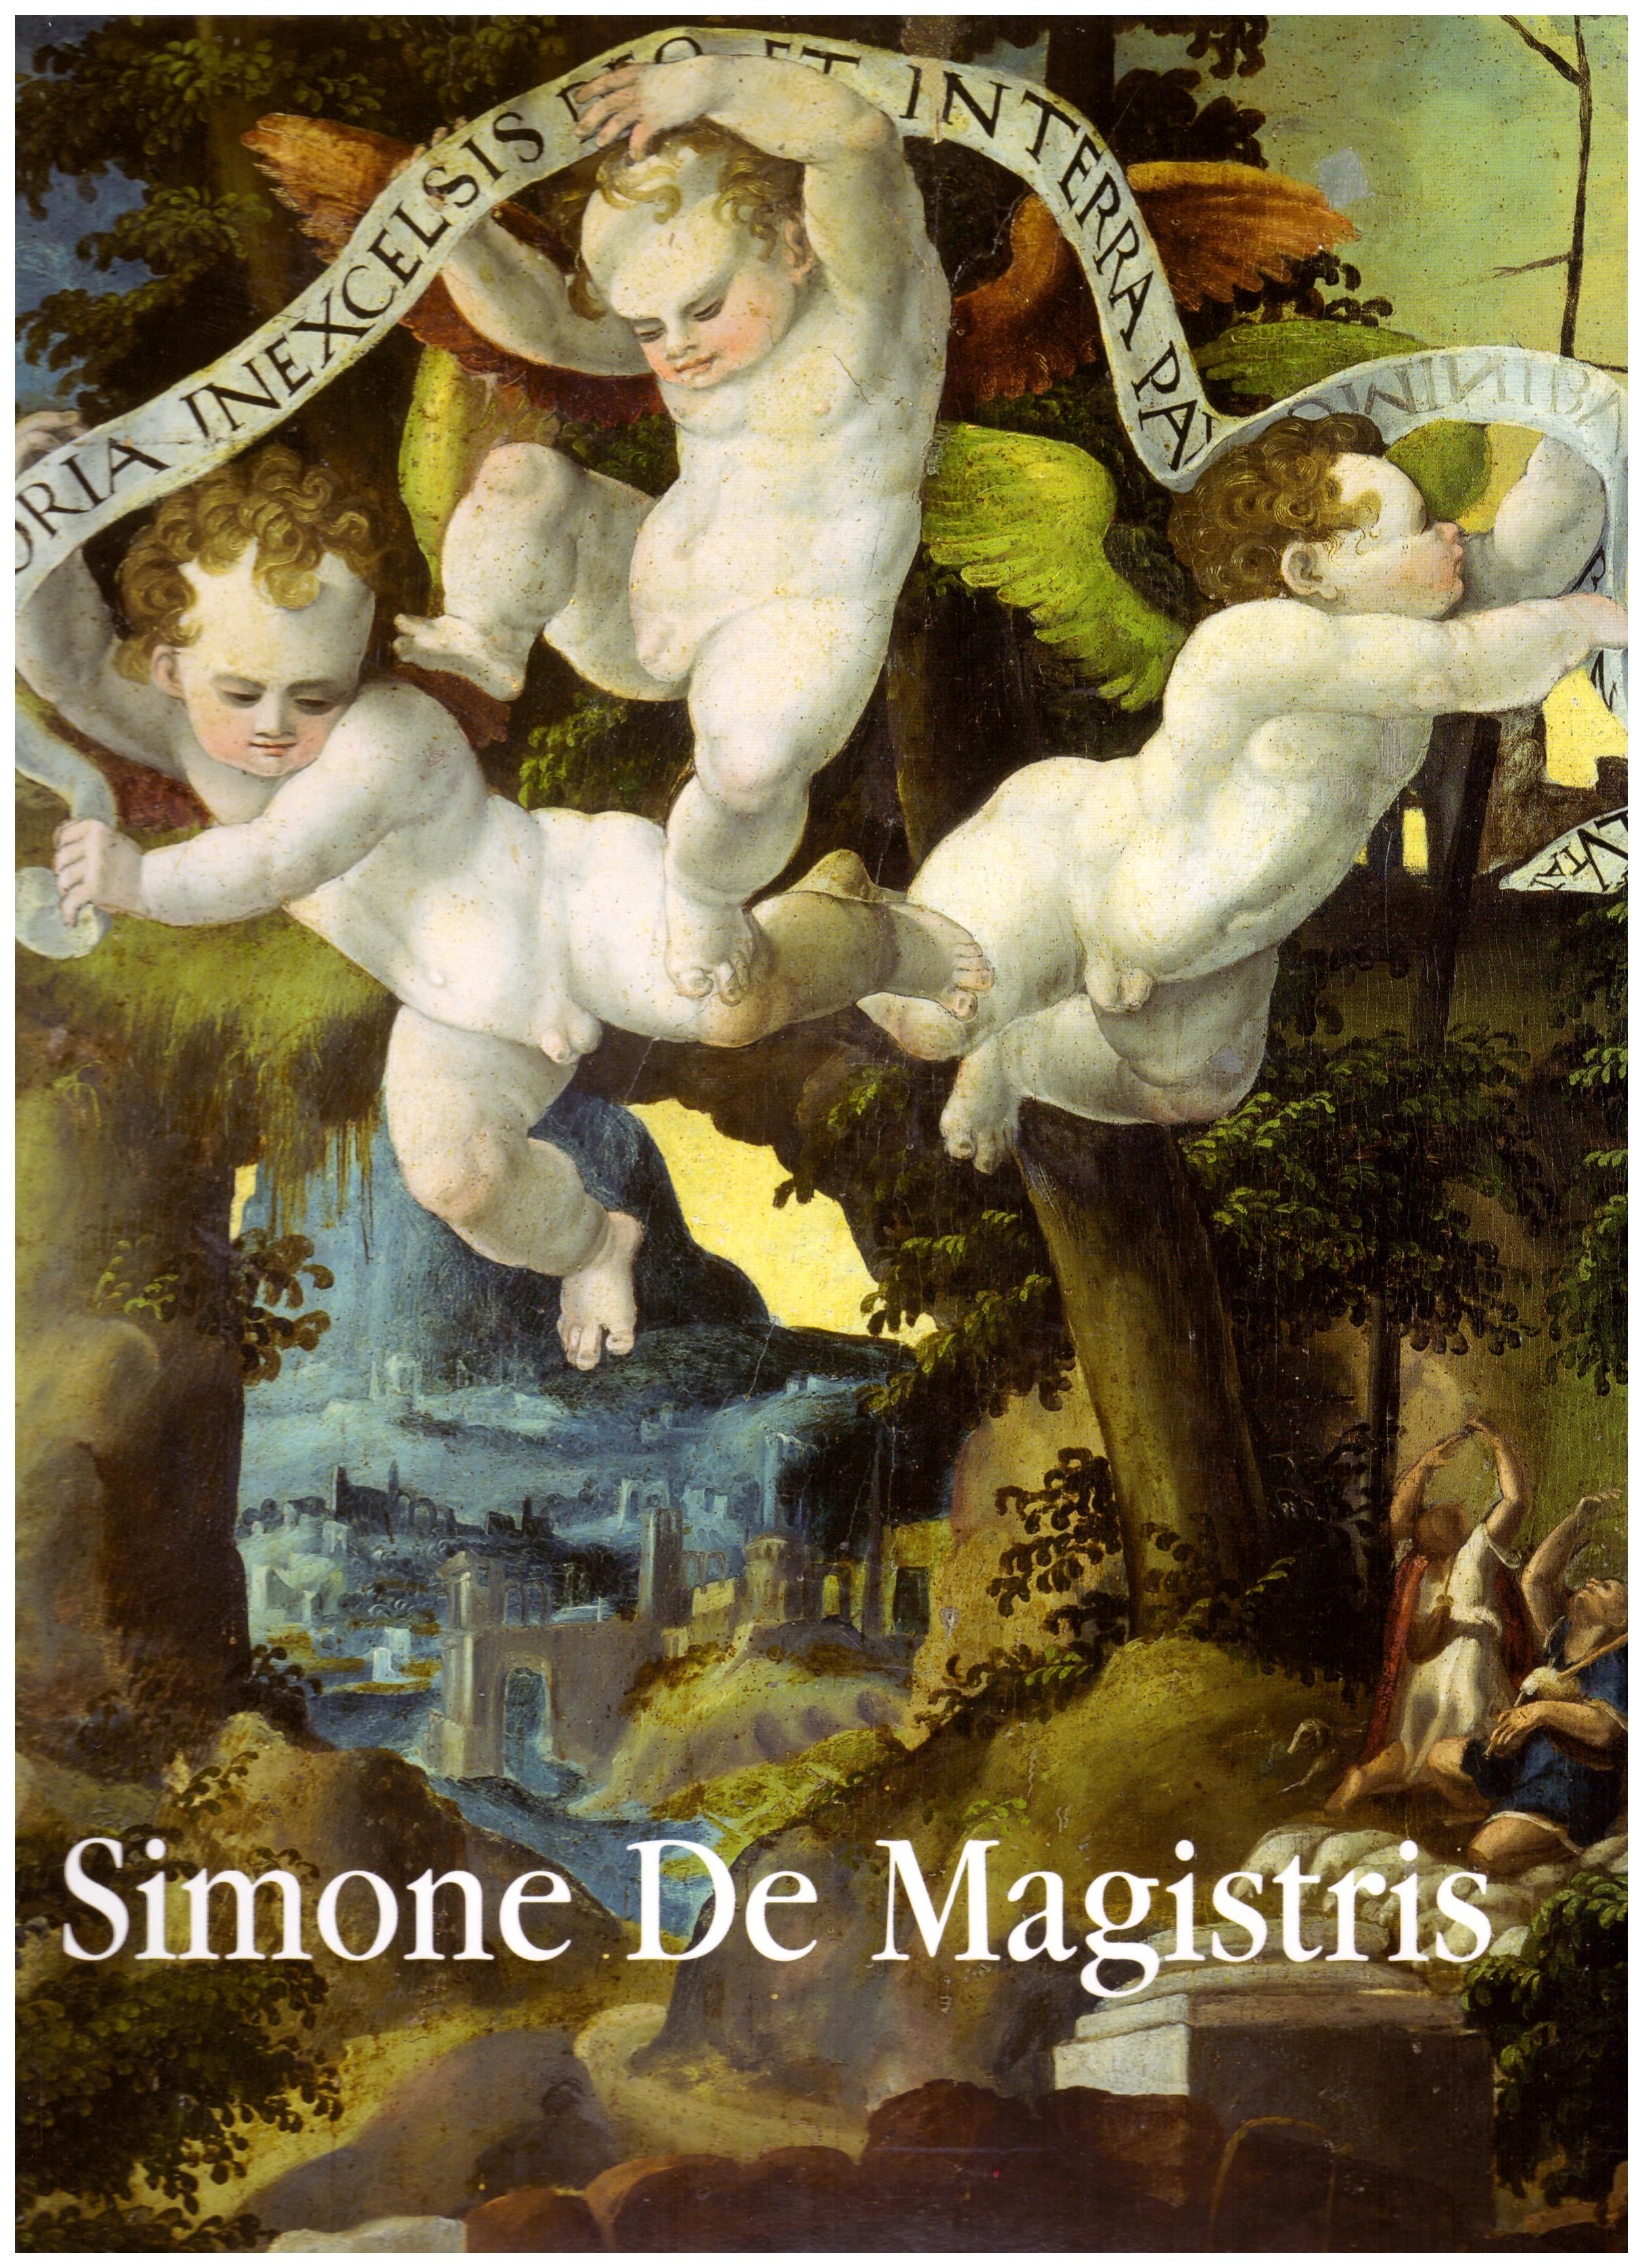 Simone de Magistris